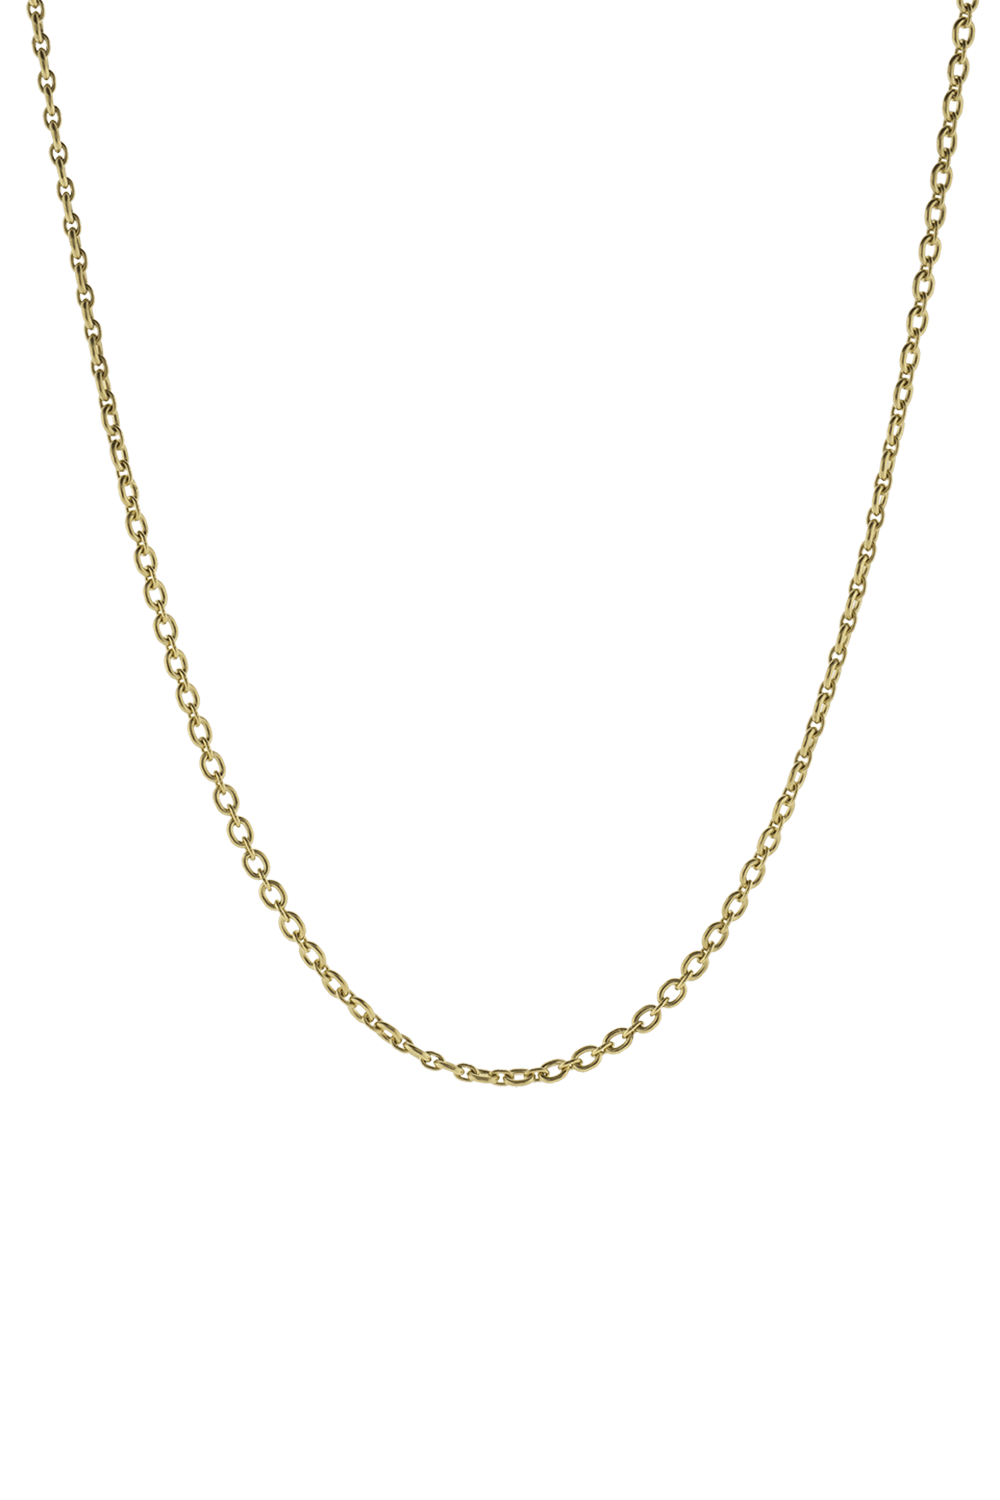 IRENE NEUWIRTH JEWELRY-Chain Necklace-YELLOW GOLD